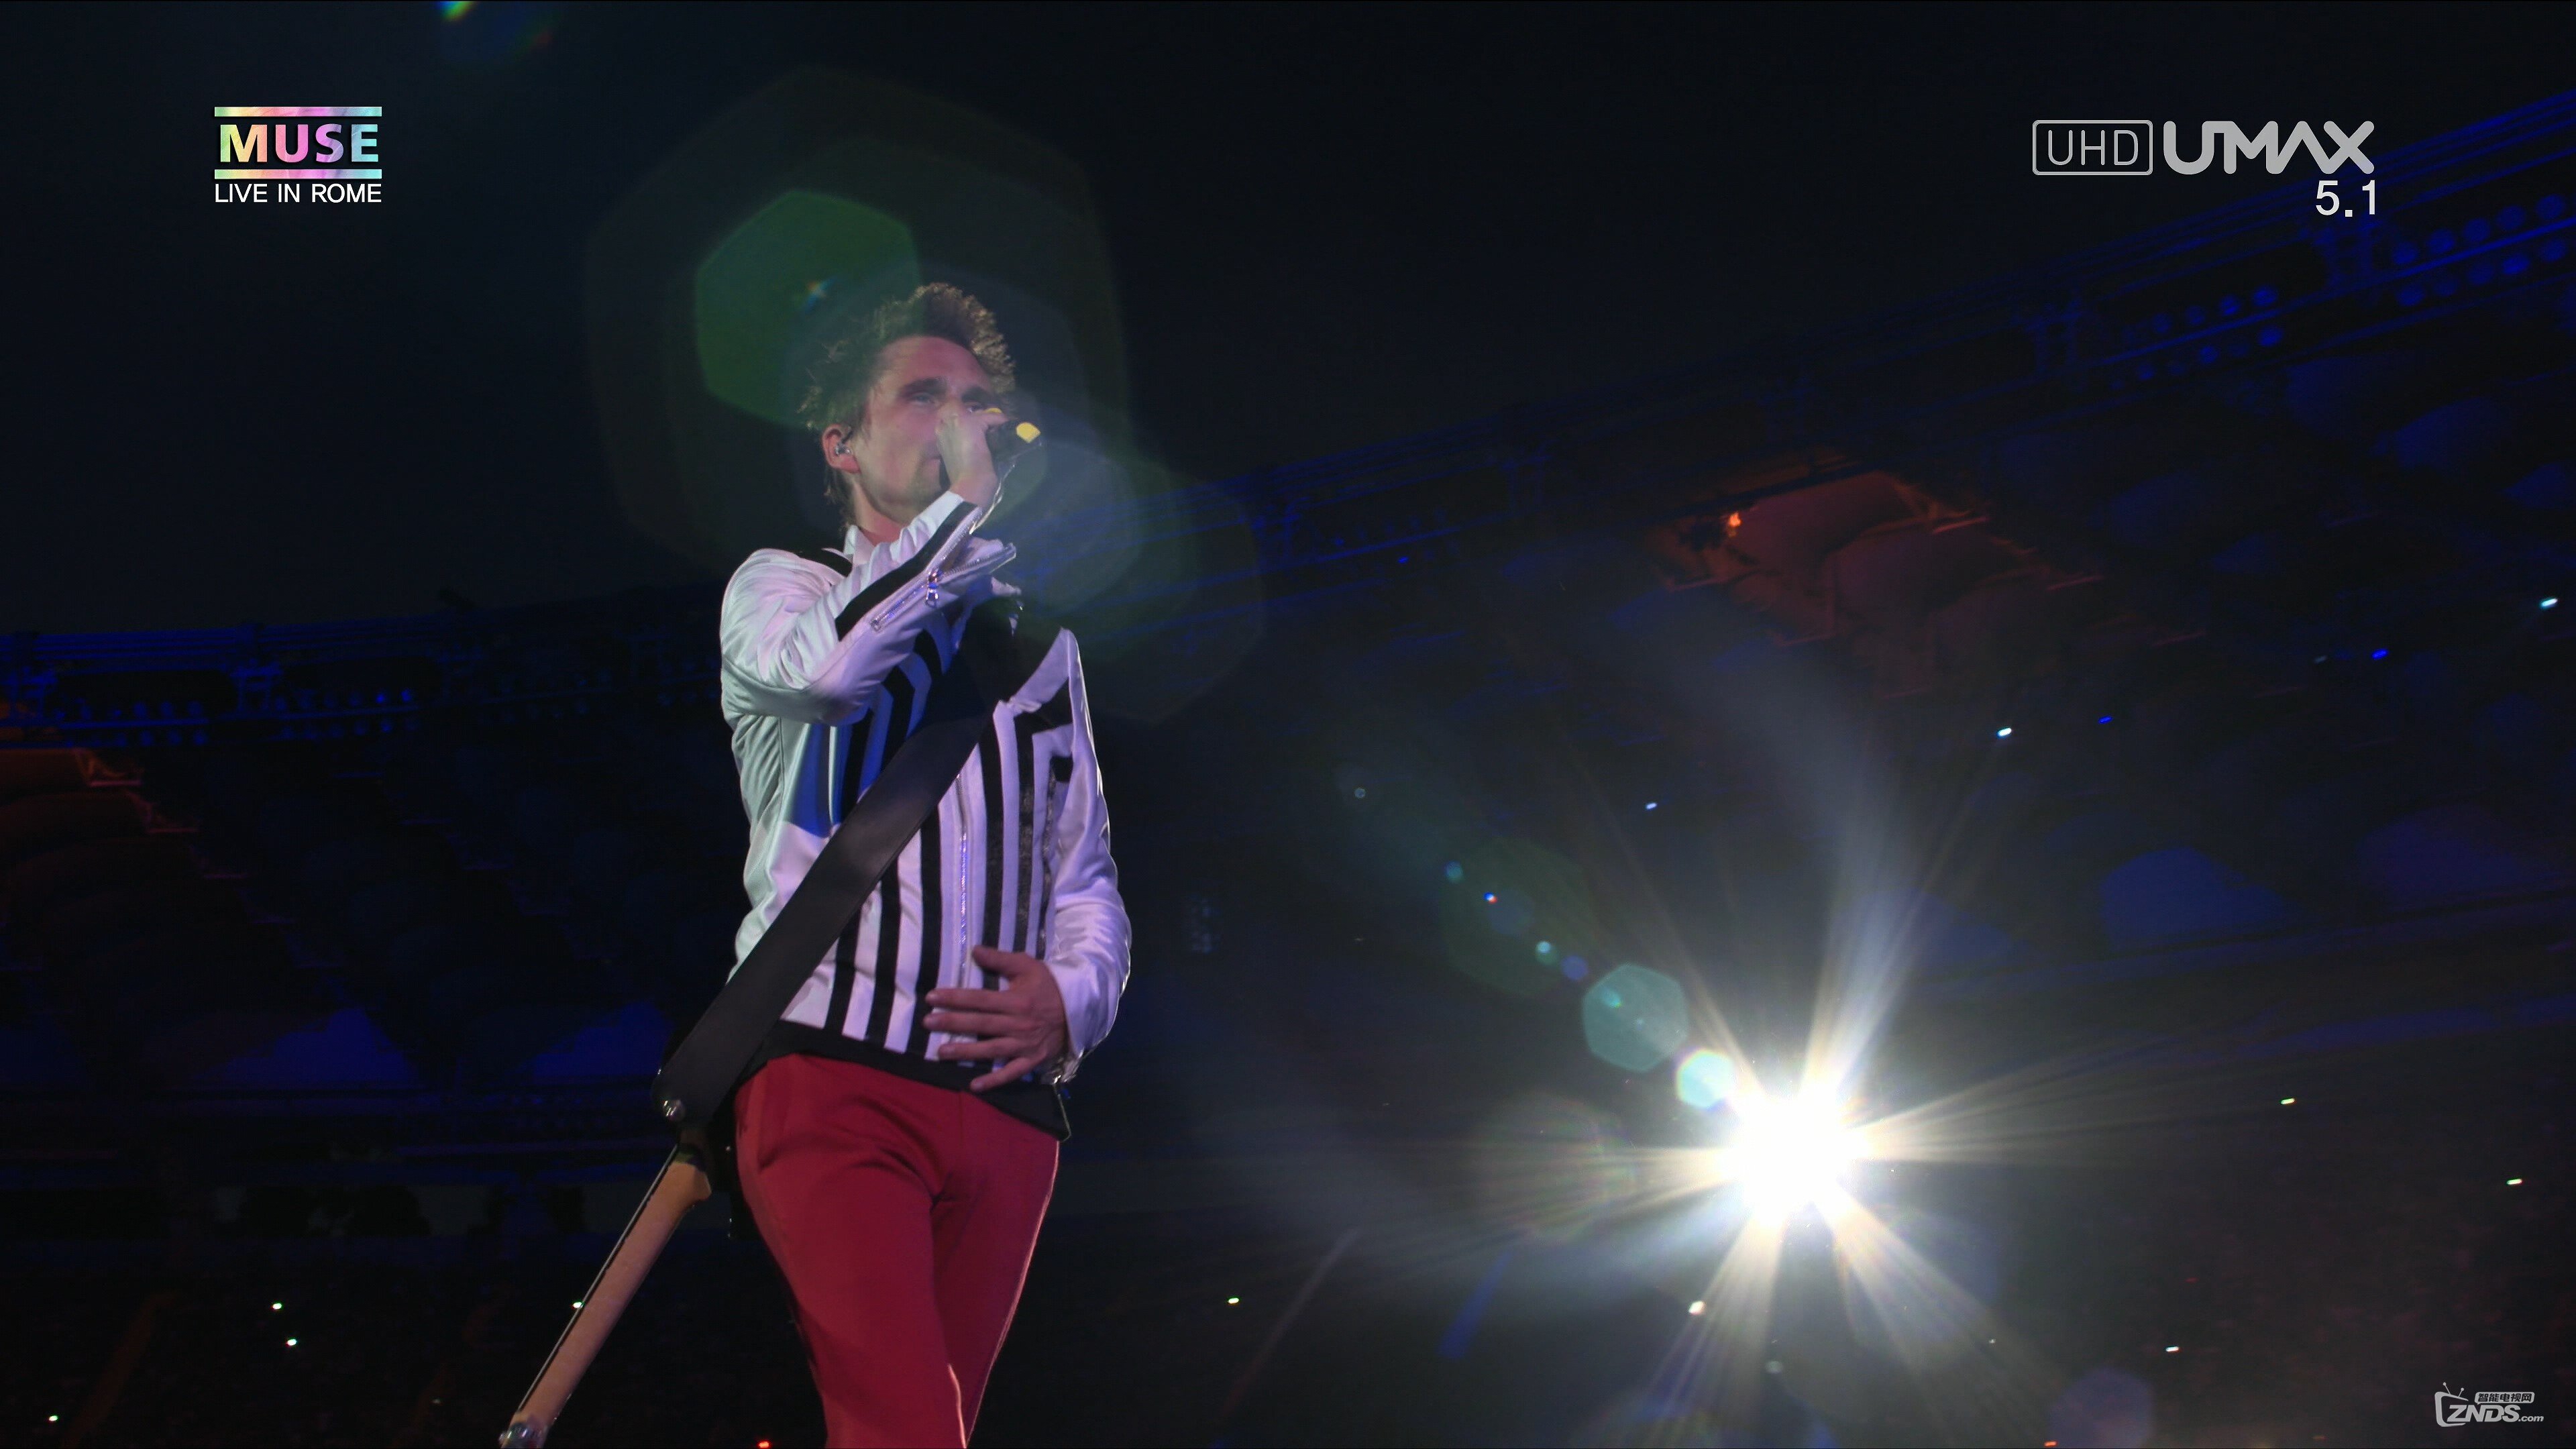 Muse.Live.At.Rome.Olympic.Stadium.2013.2160p.UHDTV.HEVC.mkv_20160312_230510.828.jpg